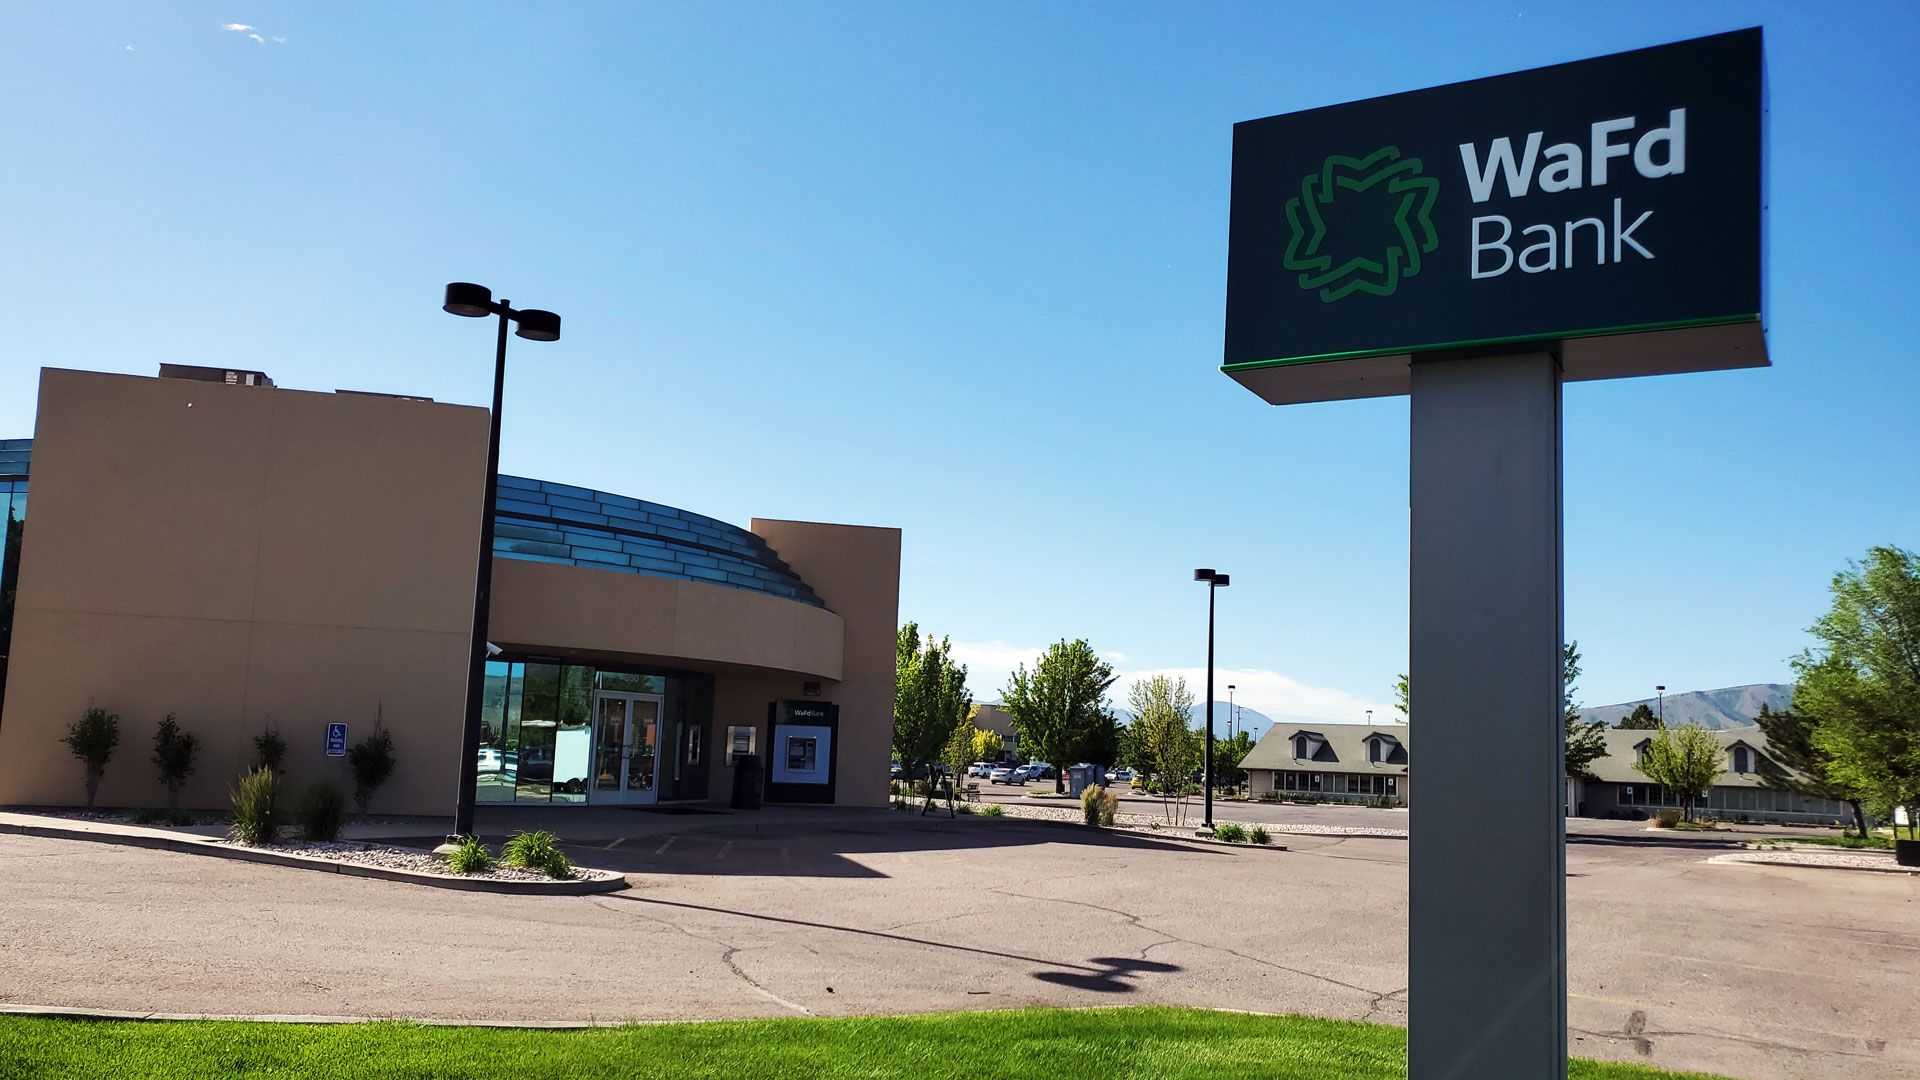 WaFd Bank in Pocatello, Idaho #1307 - Washington Federal.